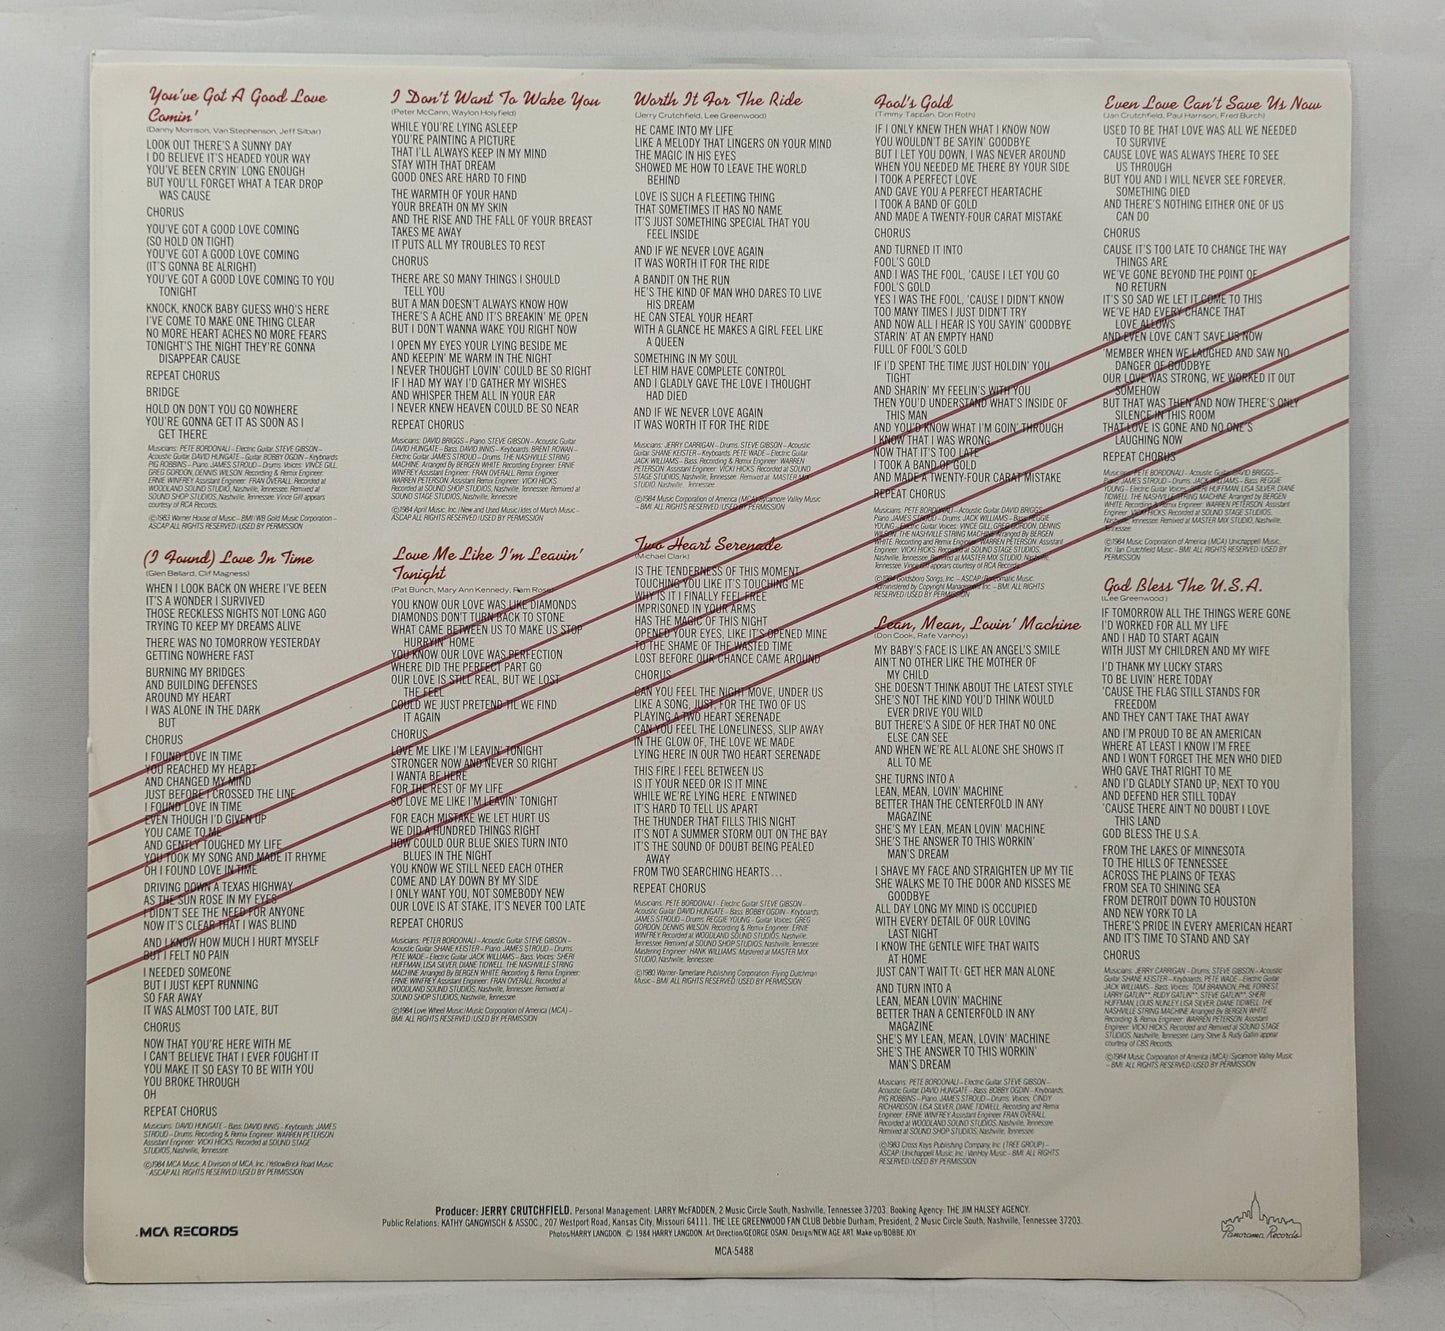 Lee Greenwood - You've Got a Good Love Comin' [Vinyl Record LP]